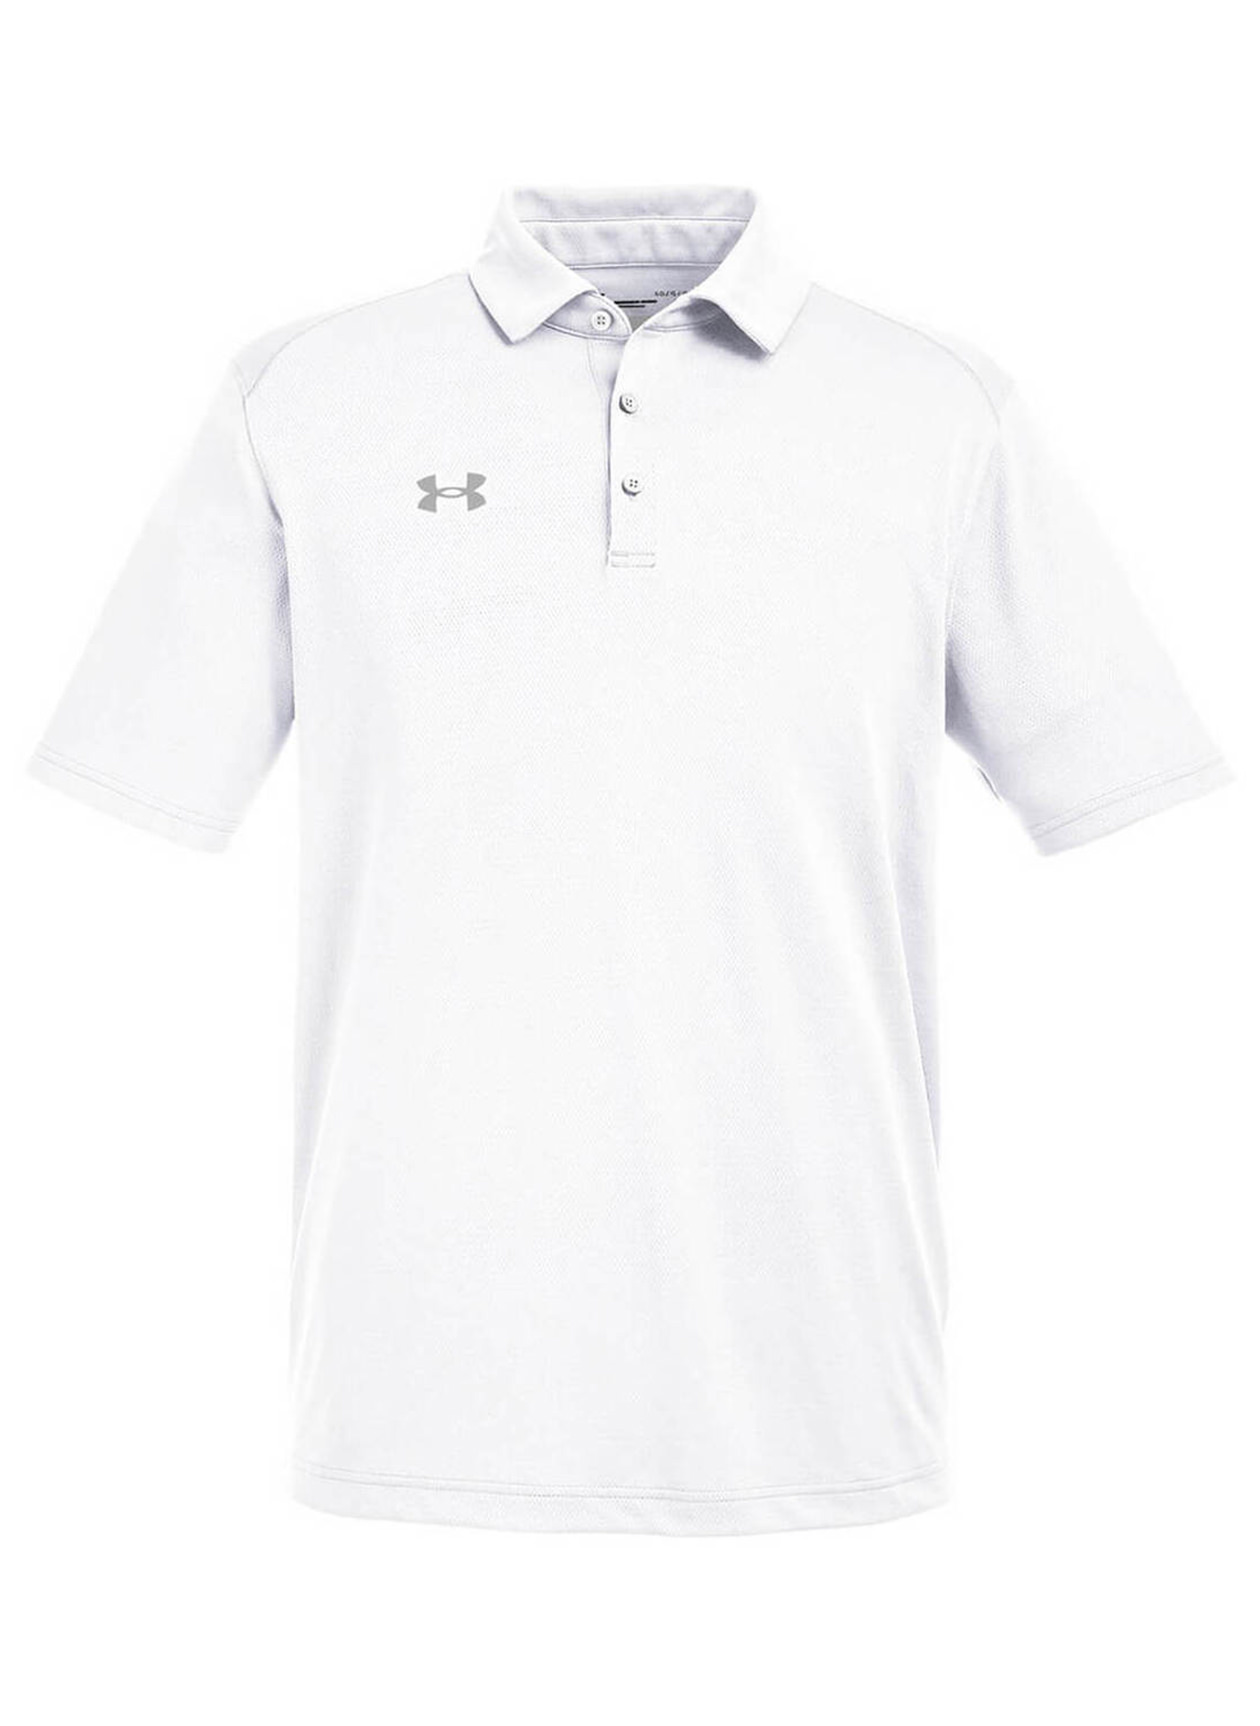 Custom Under Armour Men's White Tech Polo | Embroidered Polo Shirts